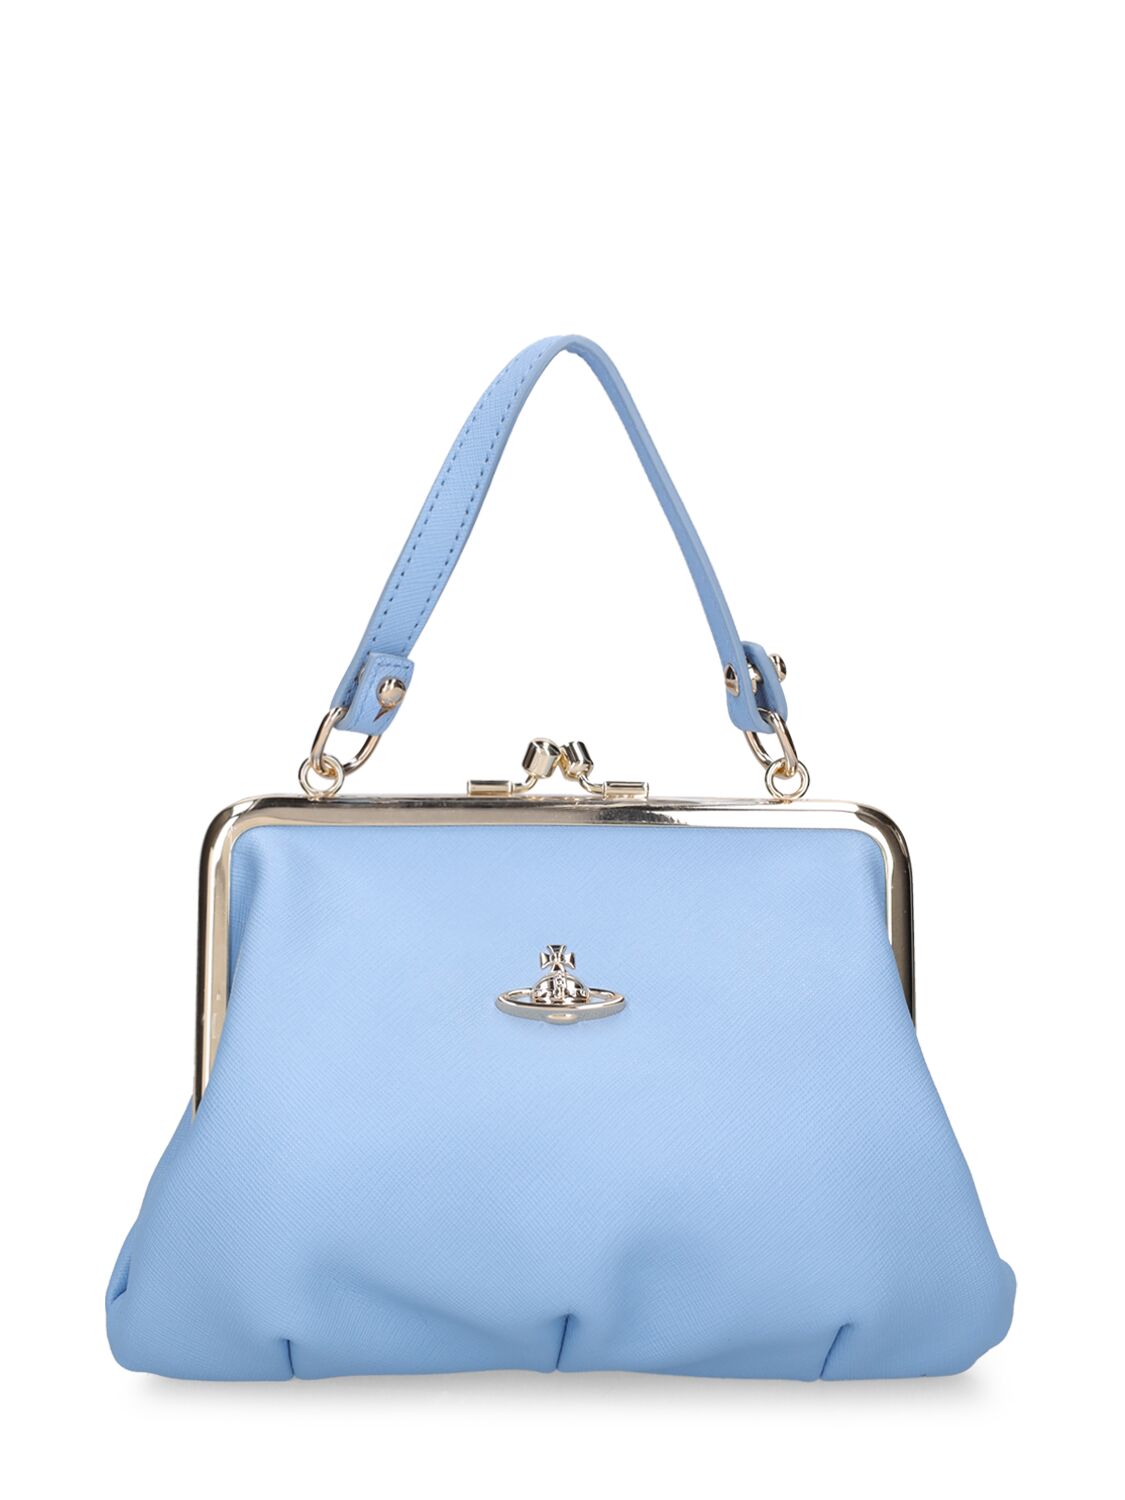 Granny Frame Saffiano Leather Bag In Light Blue